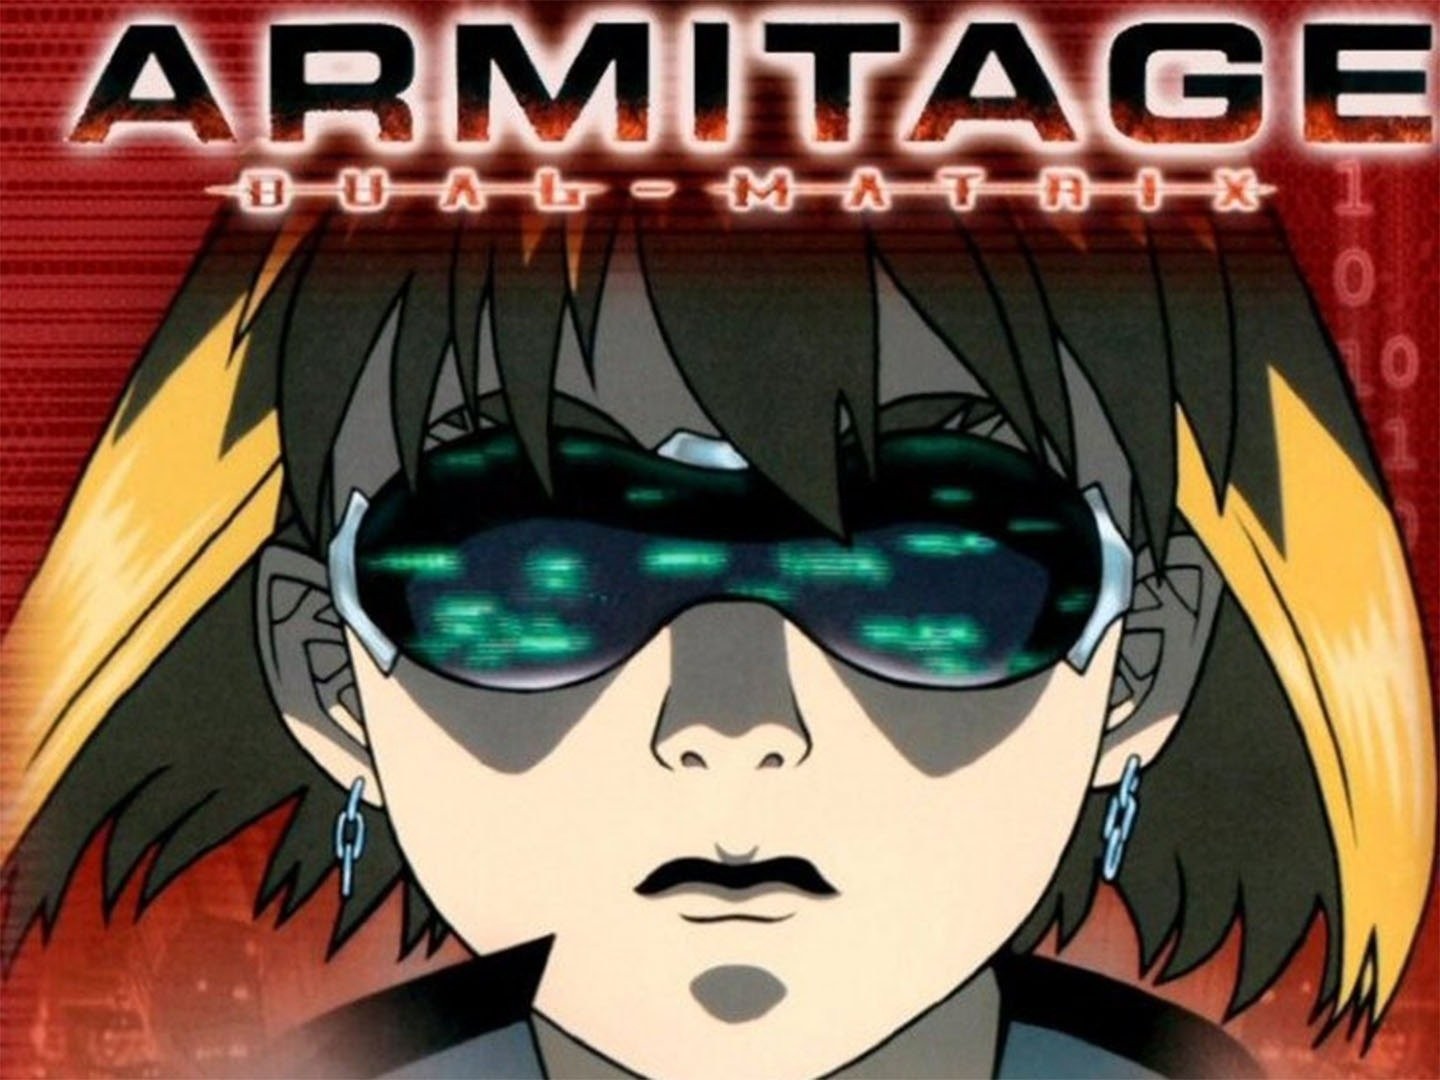 Amazon.com: Armitage III: Episode 1 Electro Blood : Movies & TV